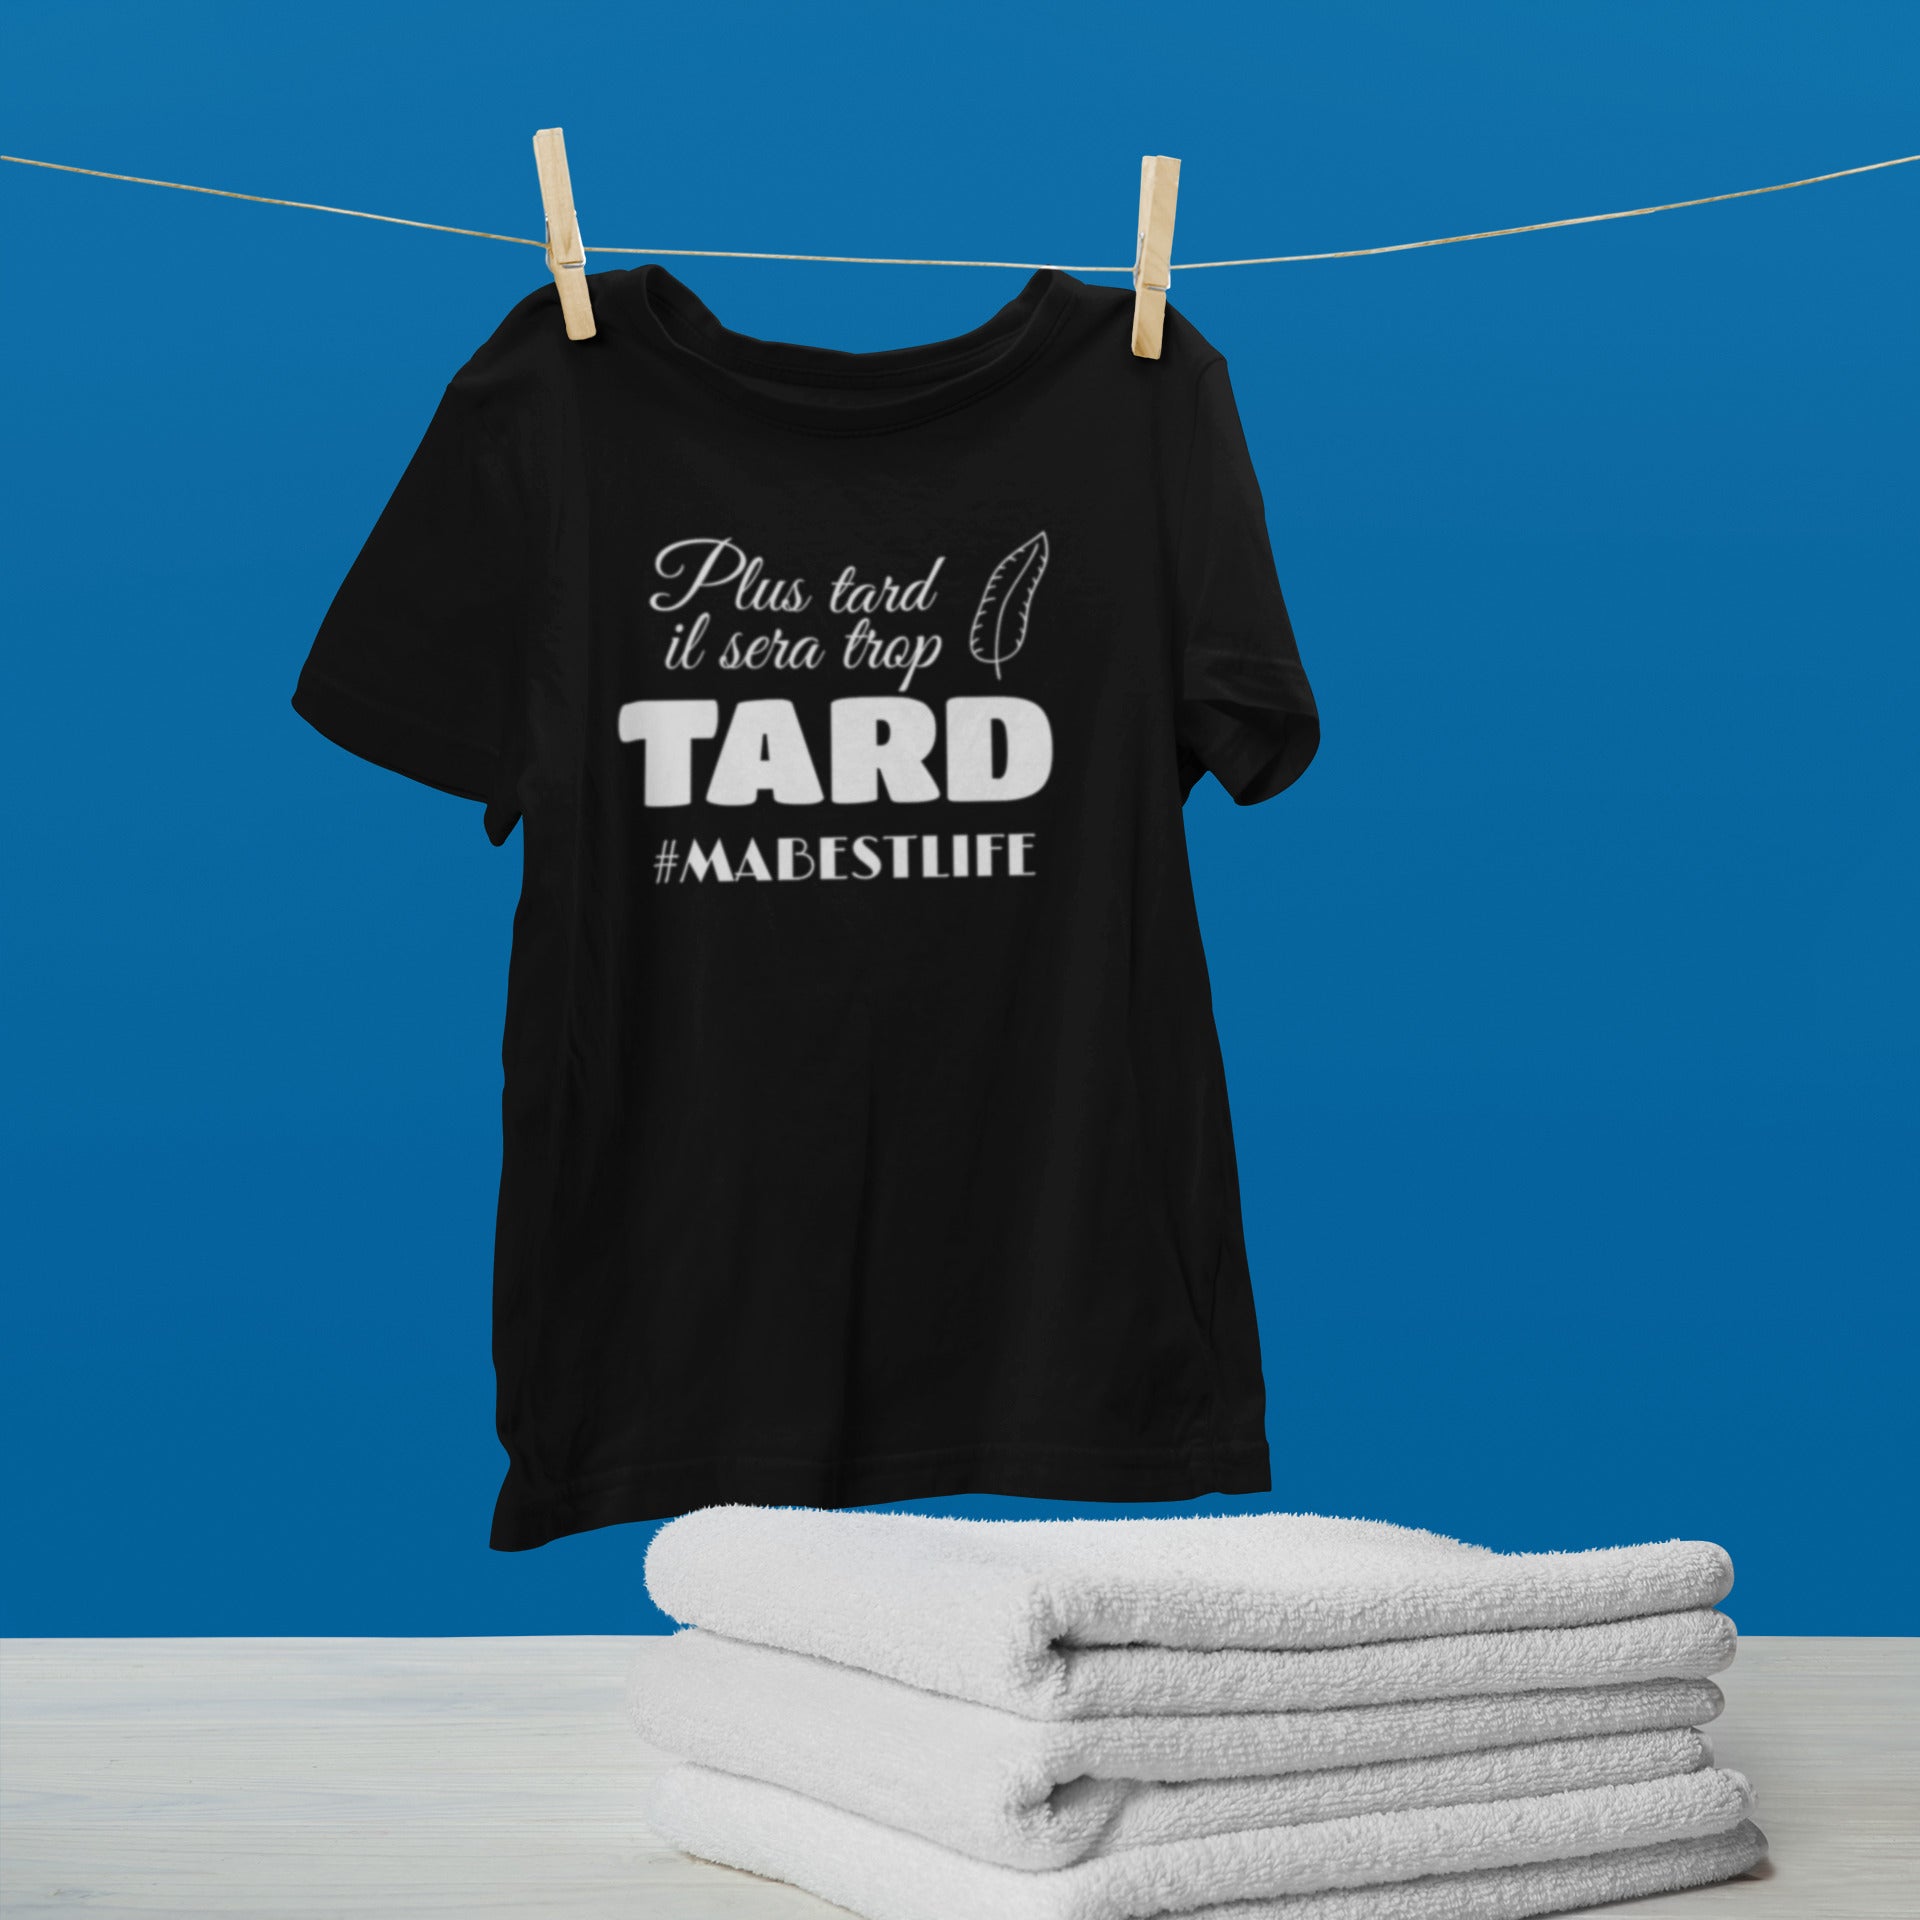 T-Shirt Plus tard il sera trop tard #MABESTLIFE-Simplement Vrai Boutique Made In Québec